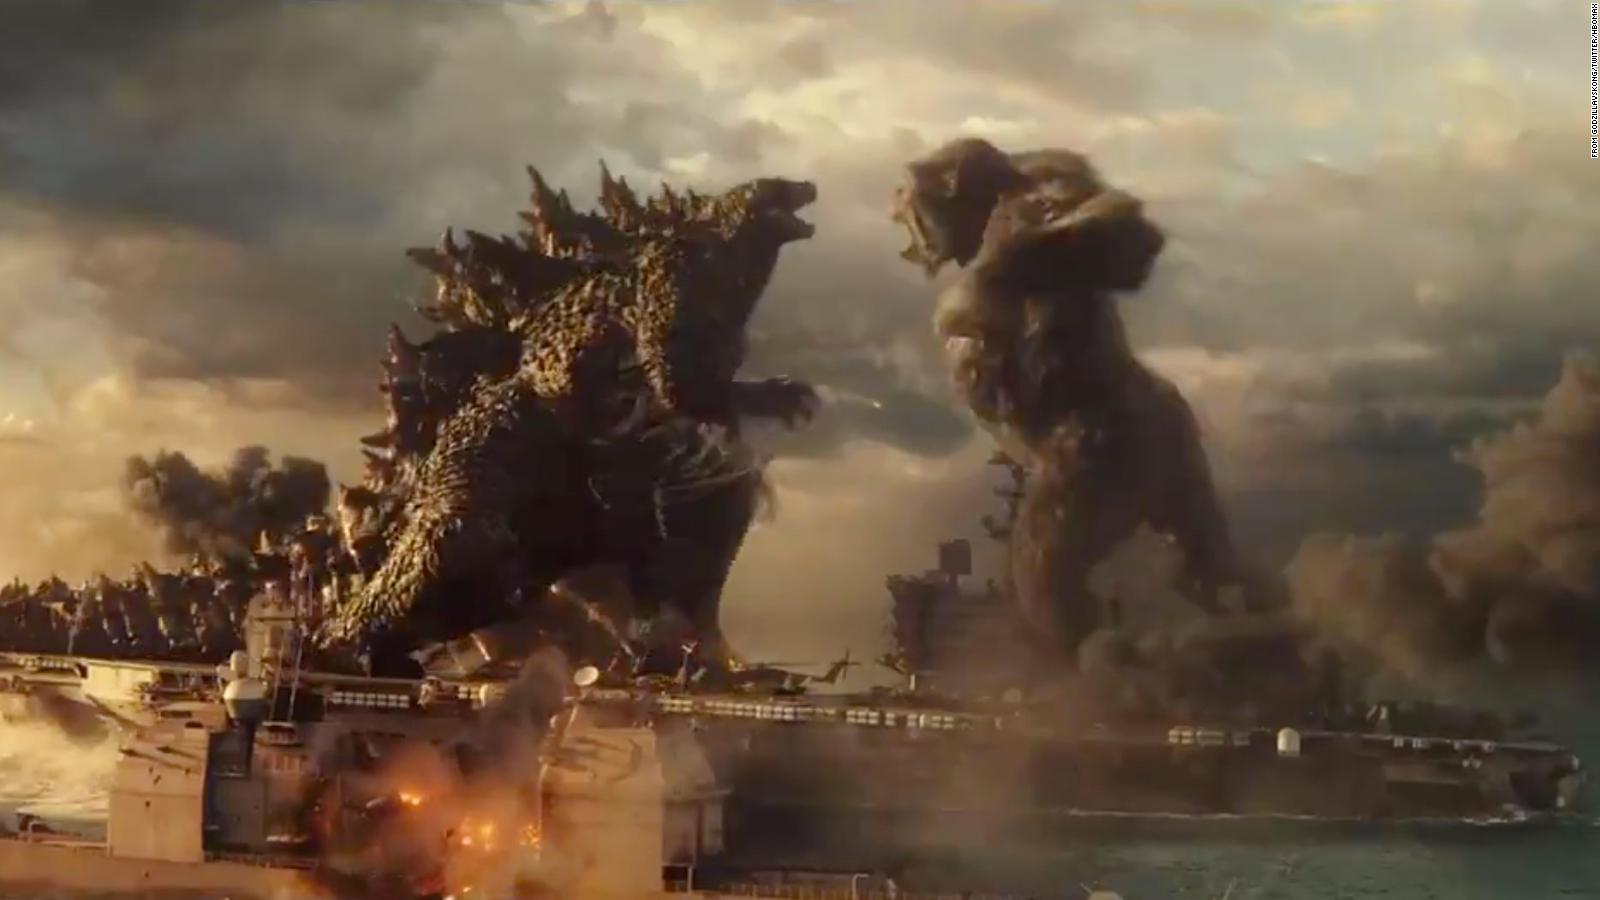 Godzilla vs Kong' trailer gives first glimpse of epic monster showdown - CNN